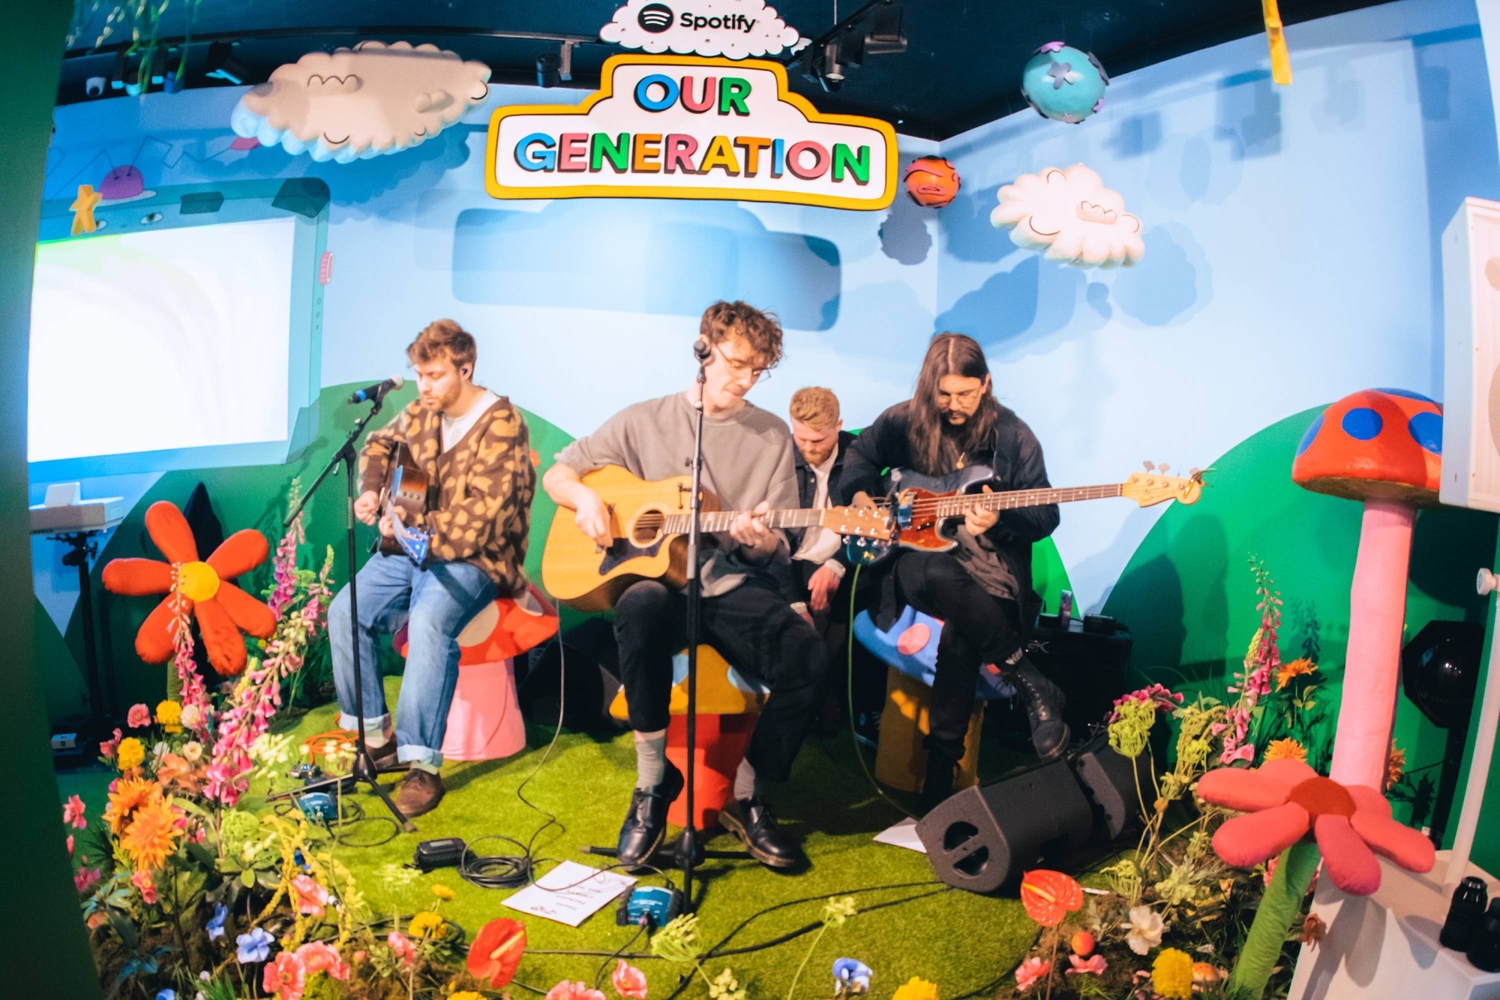 Brighton quartet Lovejoy discuss their career so far and recent Spotify Our Generation show